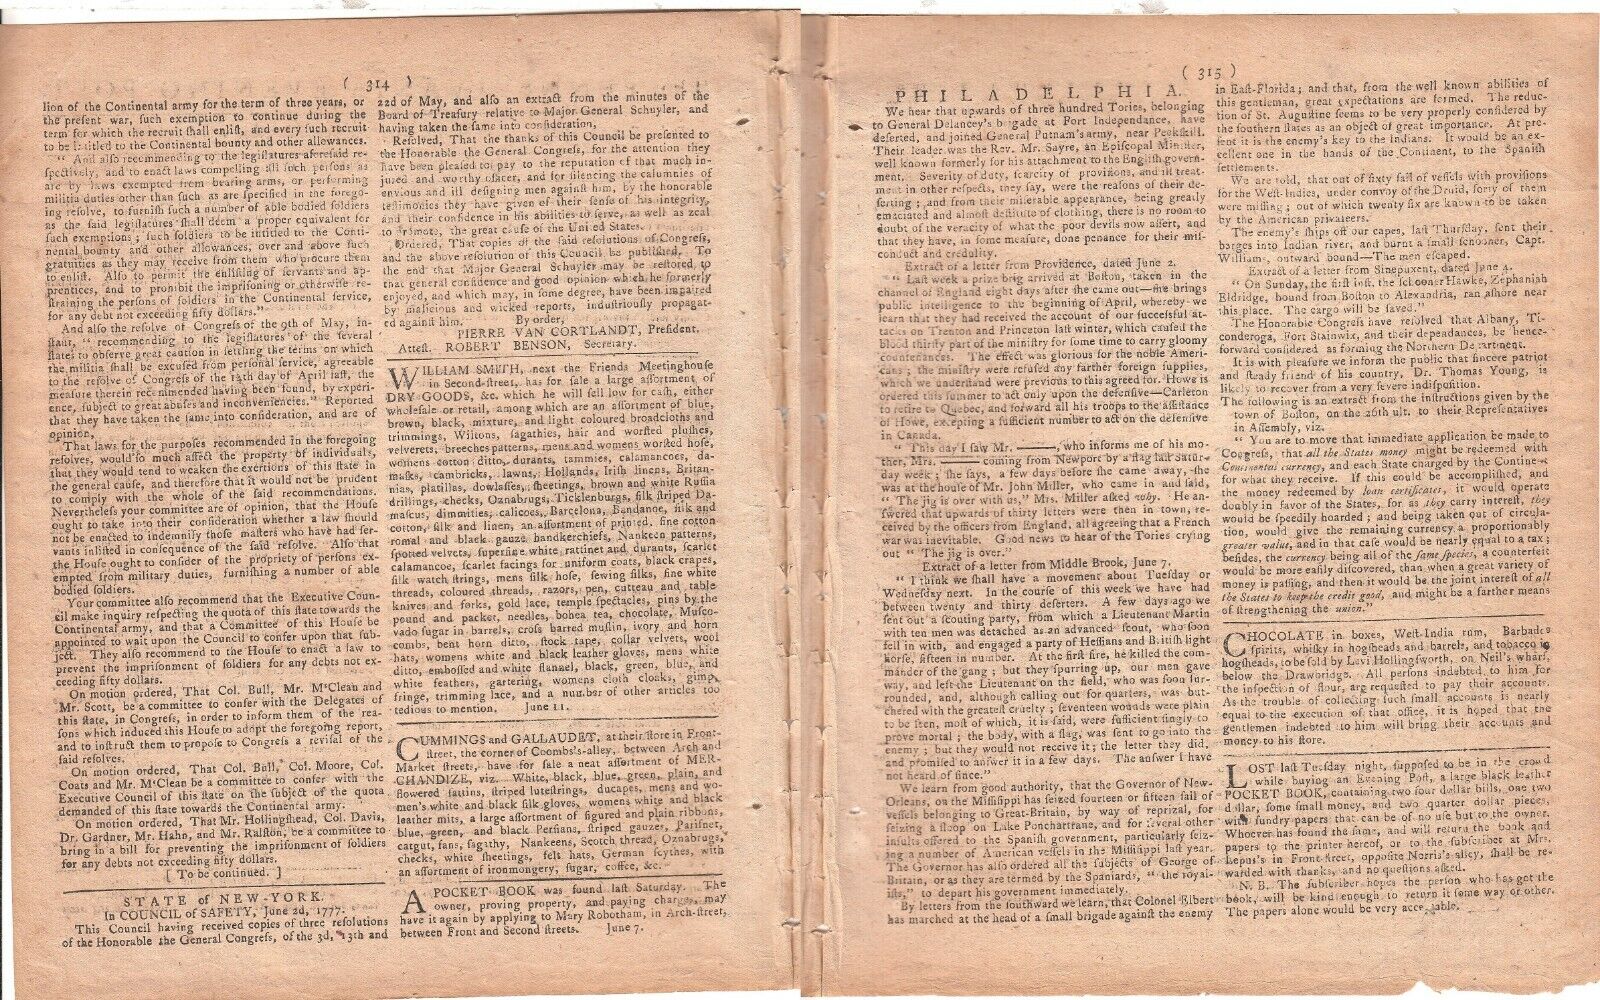 June 12, 1777 Pennsylvania Evening Post Newspaper Revolutionary War Era